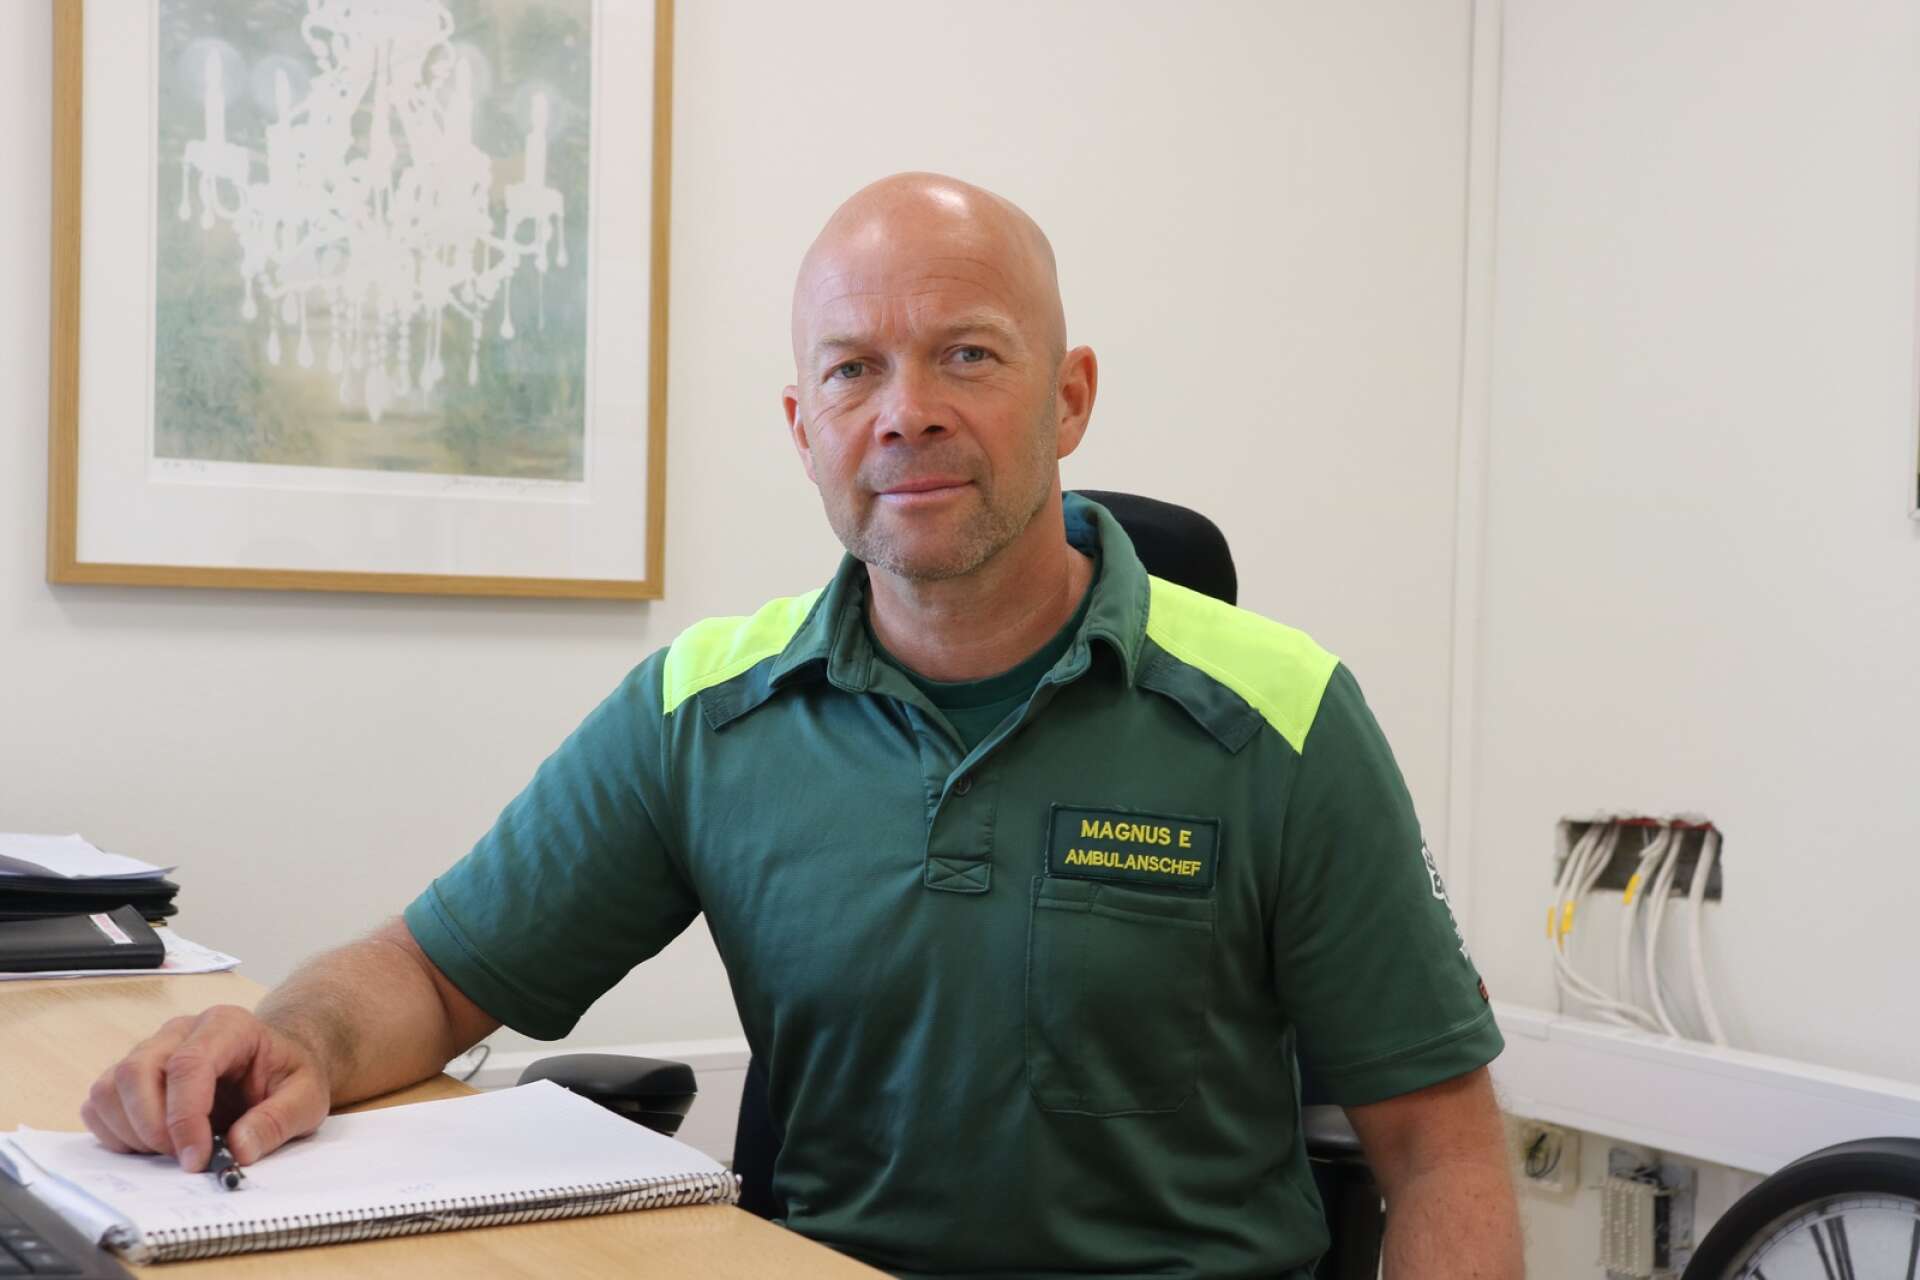 Första maj blev Magnus Ericsson ny ambulanschef i Kristinehamn. 